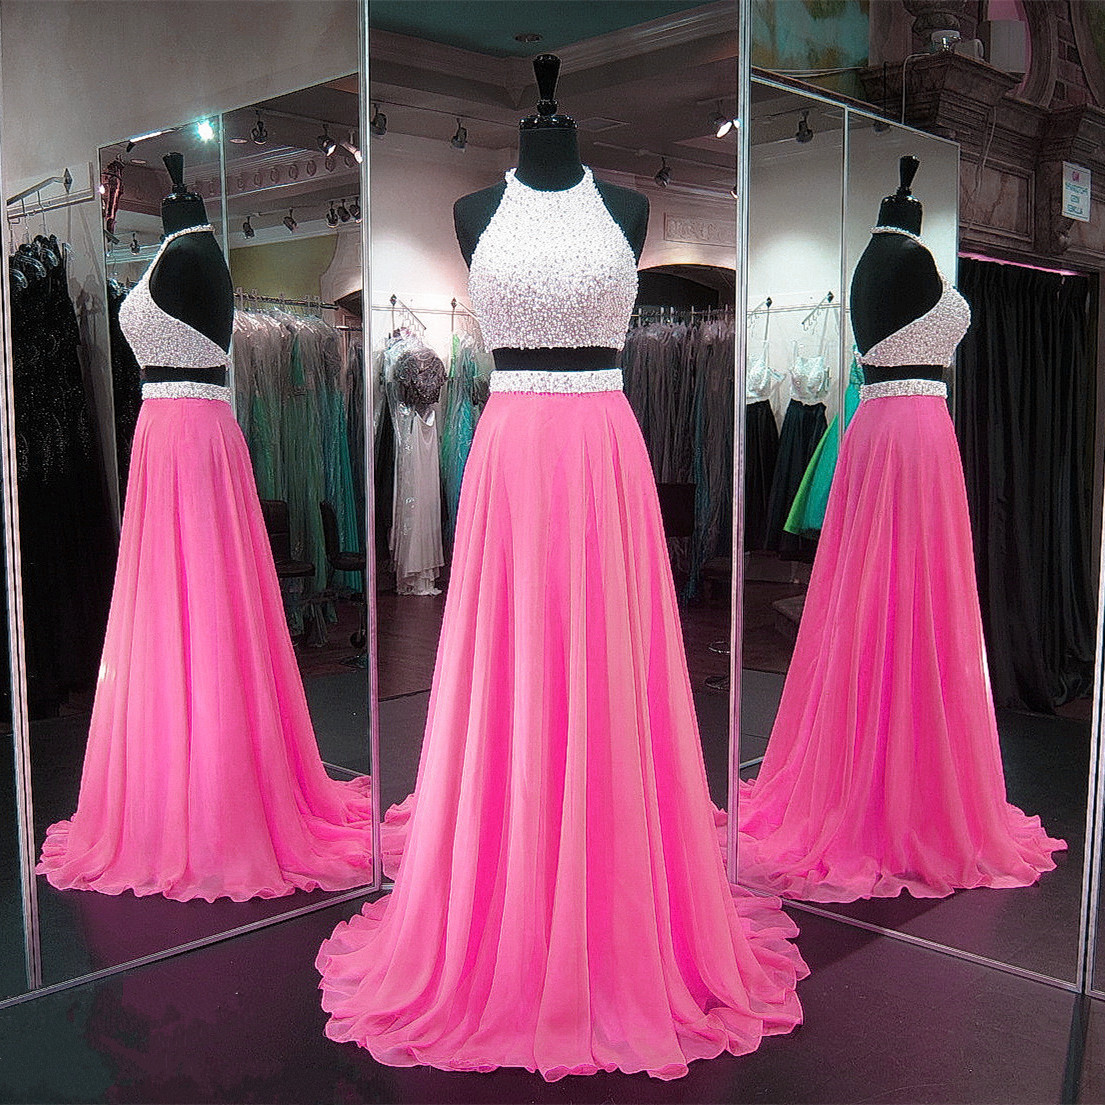 Pink Prom Dresses, Elegant Prom Dress, Floor Length Prom Dress, Chiffon Prom Dress, 2 Piece Prom Dresses, Beaded Prom Dress, A Line Prom Dress